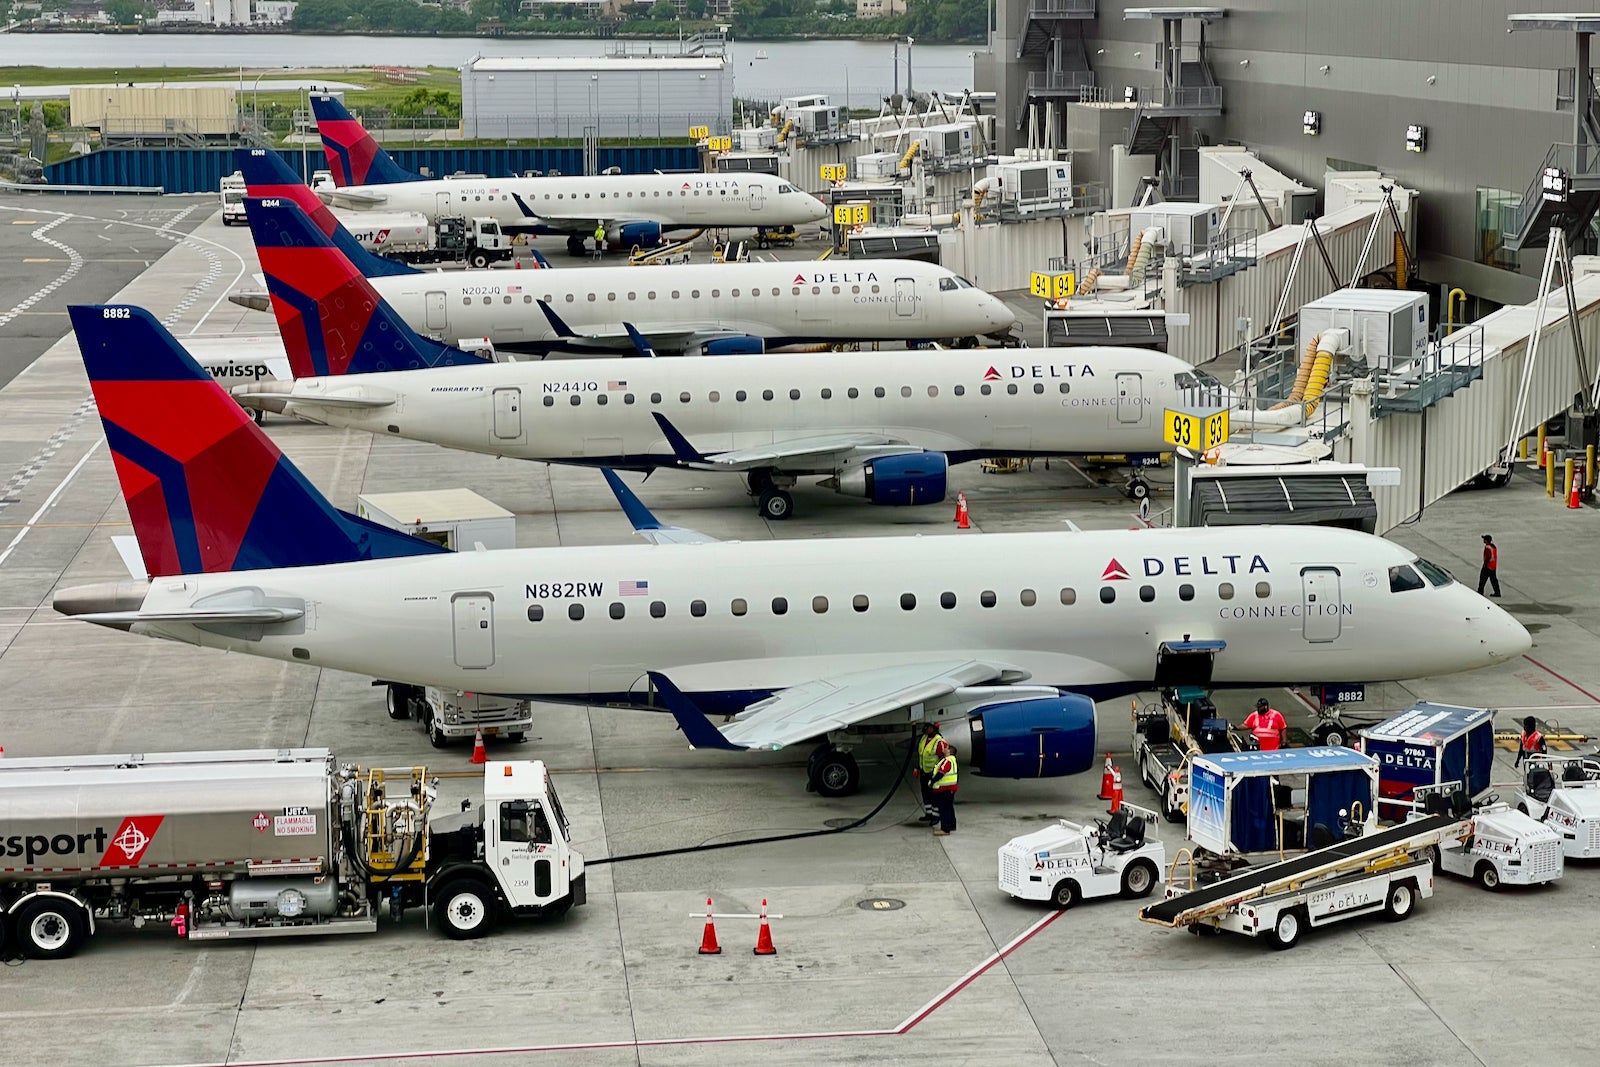 Delta drops 4 domestic routes, including one new one from Boston Delta New LaGuardia LGA Terminal 2 Zach Griff 2